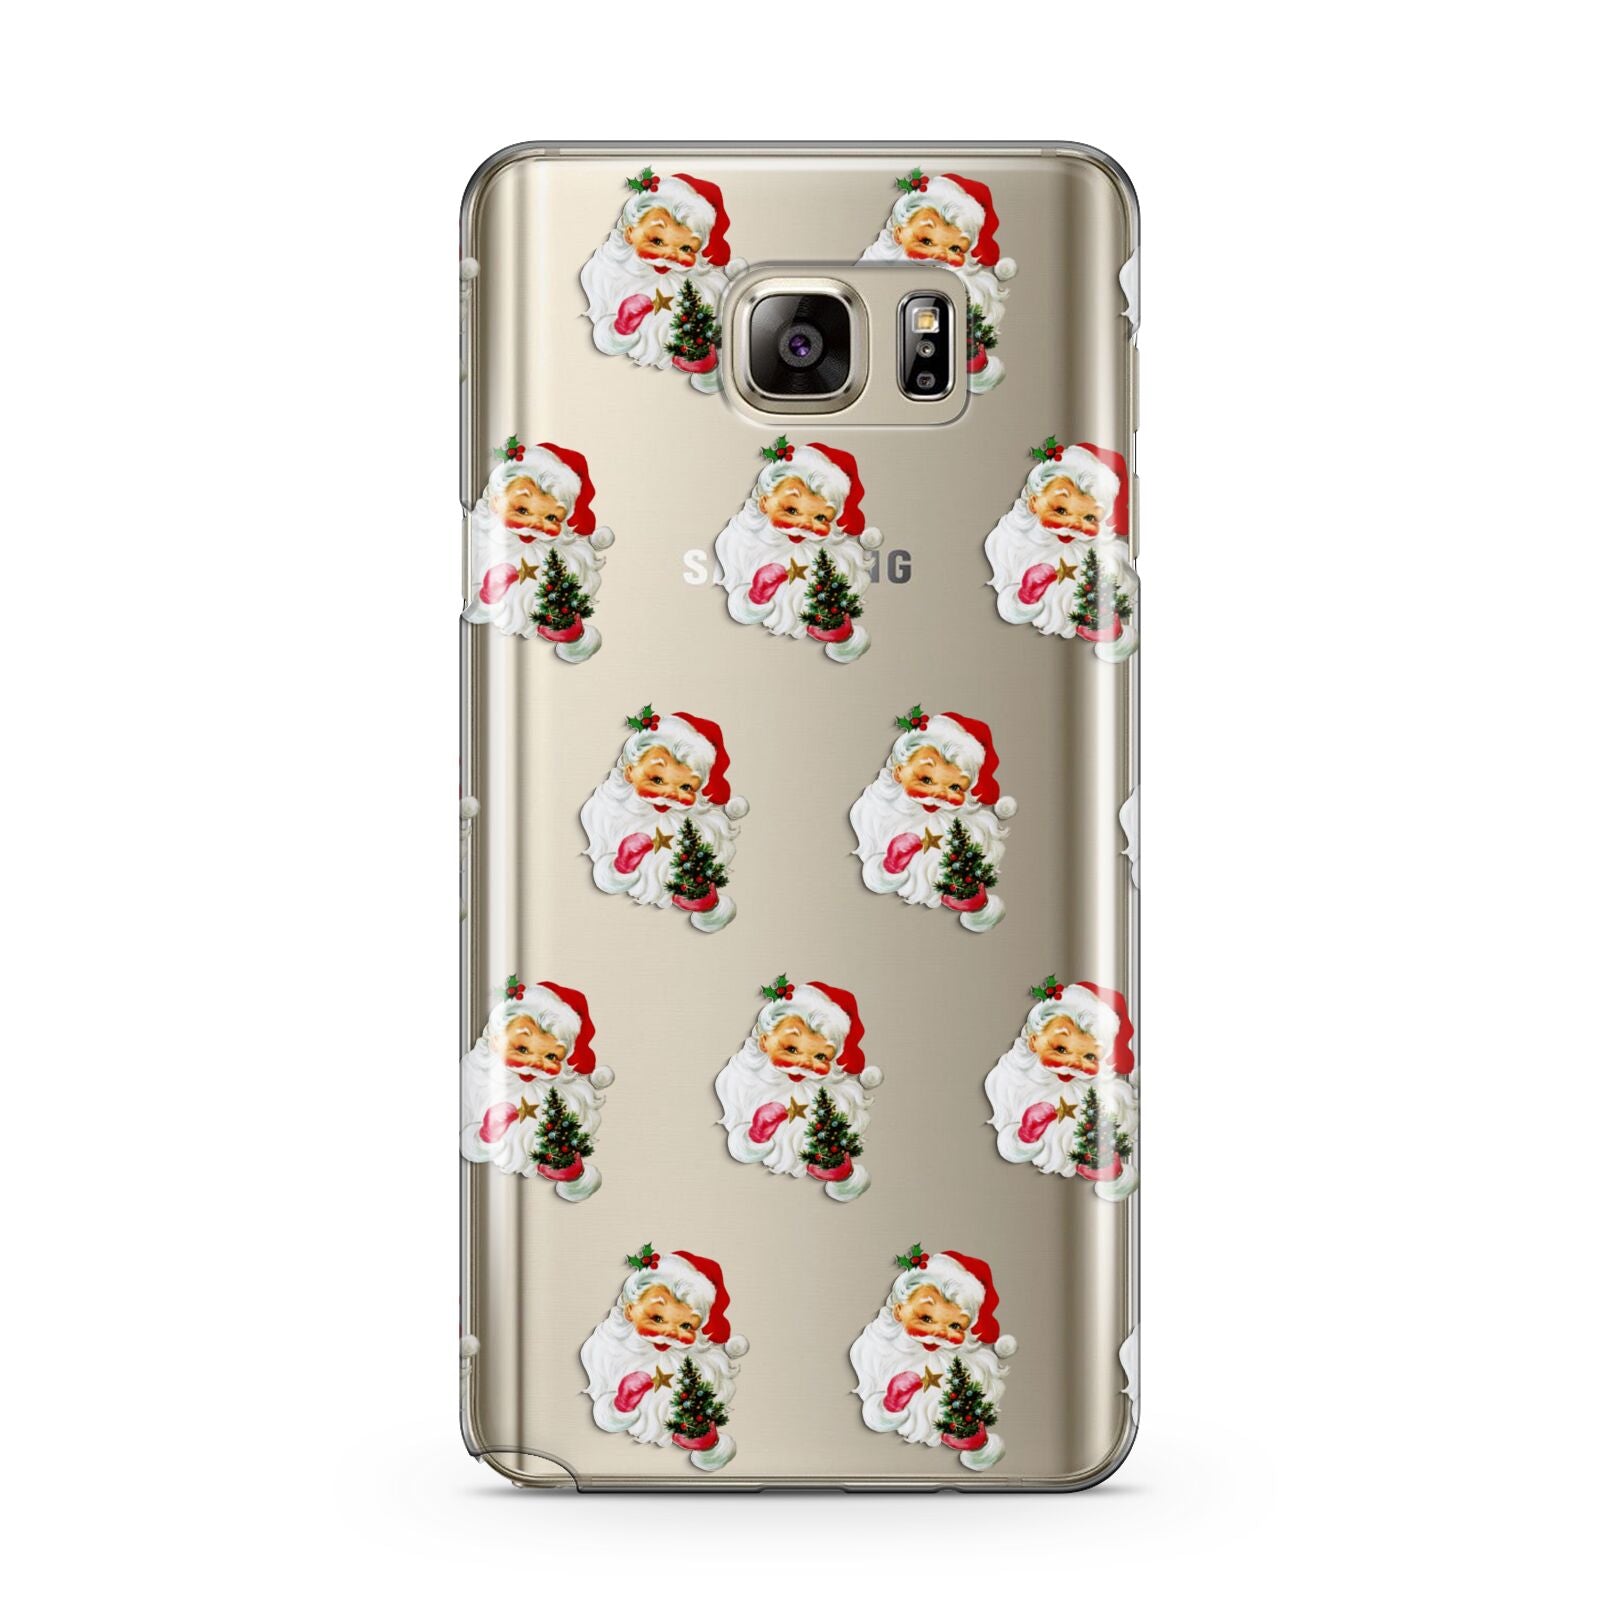 Retro Santa Face Samsung Galaxy Note 5 Case